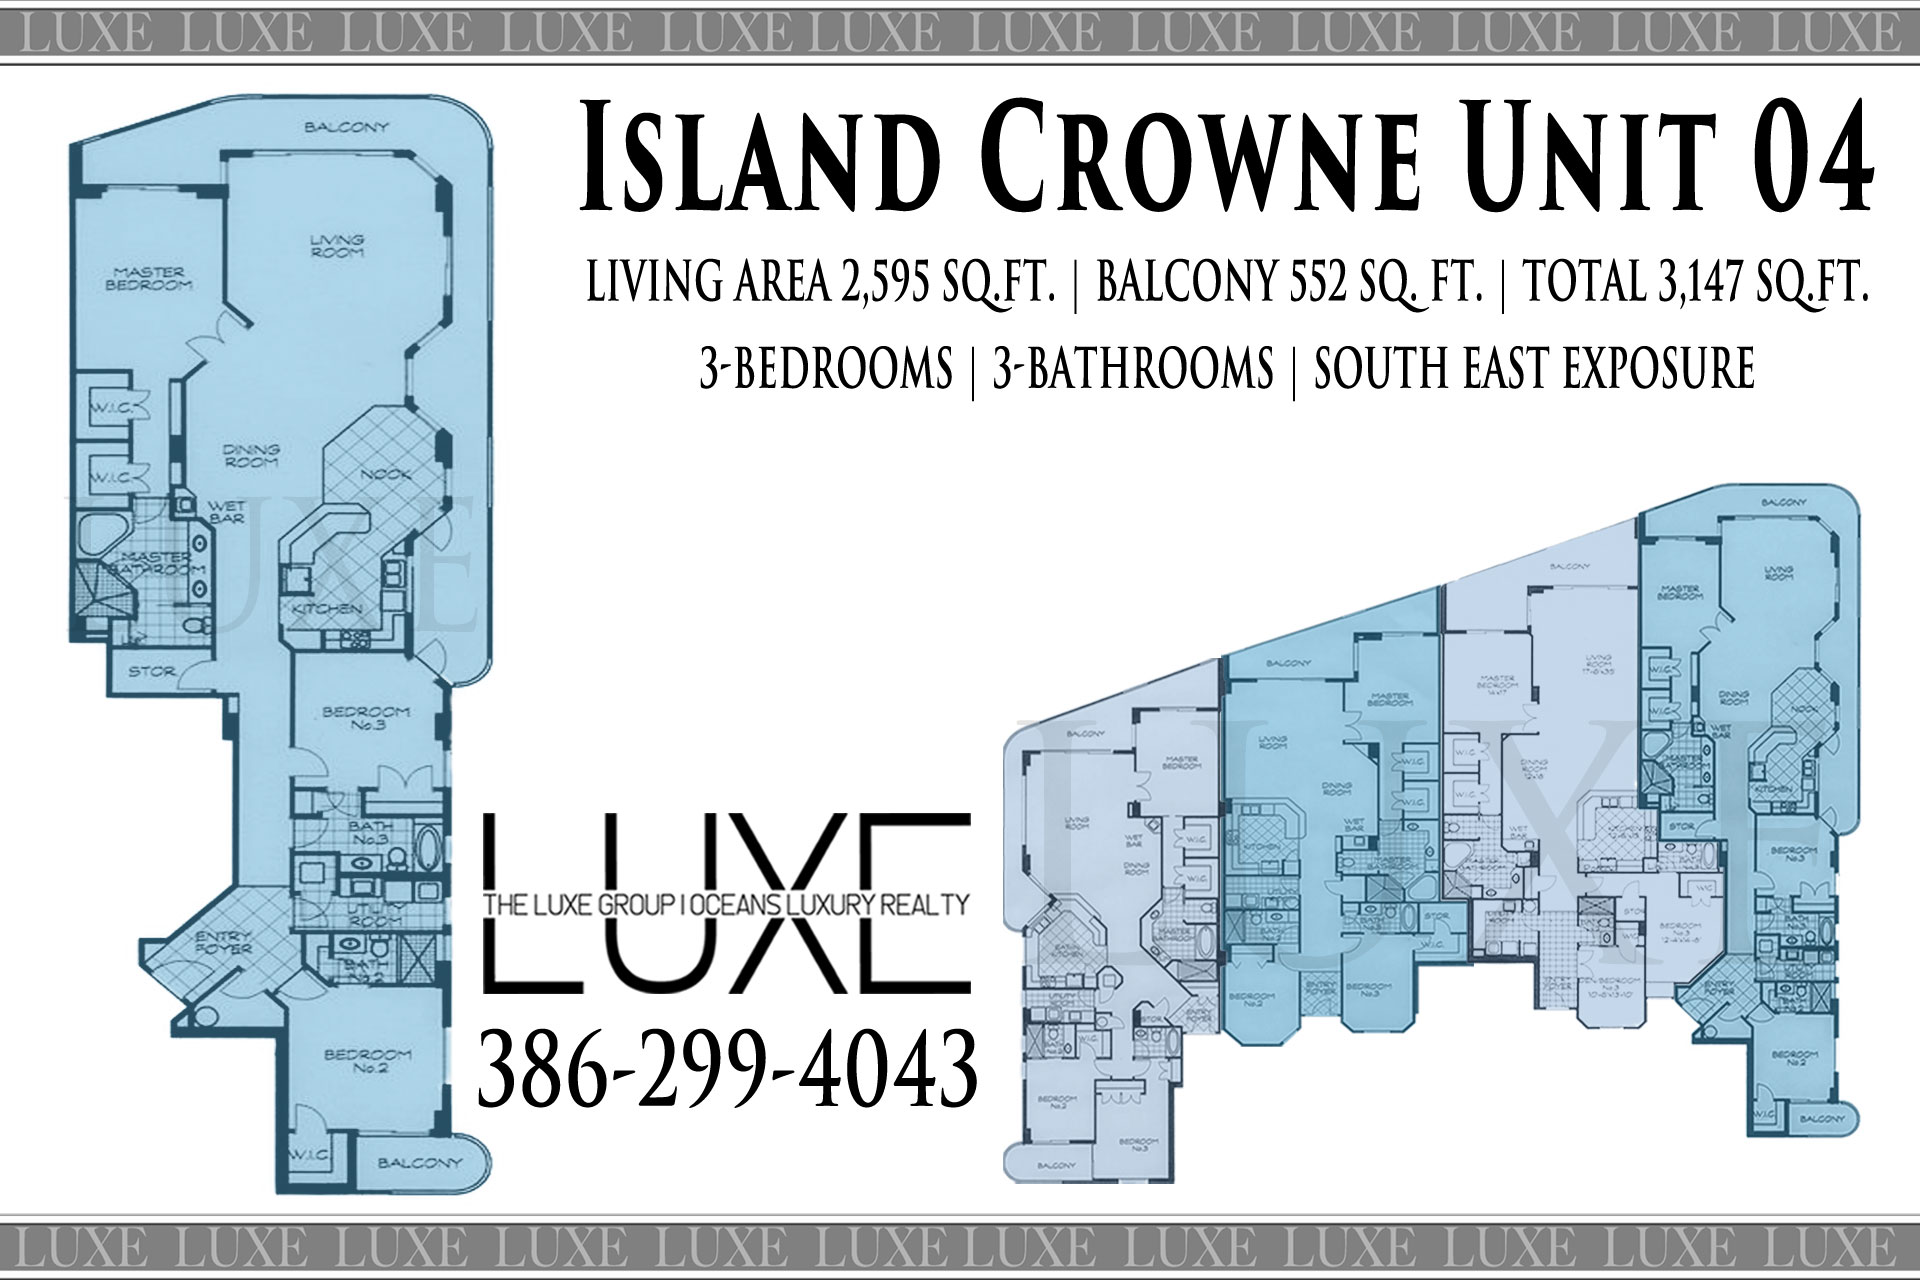 Island Crowne Condo Unit 04 Floor Plan D - 1900 N Atlantic Ave Daytona Beach, Florida - The LUXE Group at Oceans Luxury Realty 386-299-4043